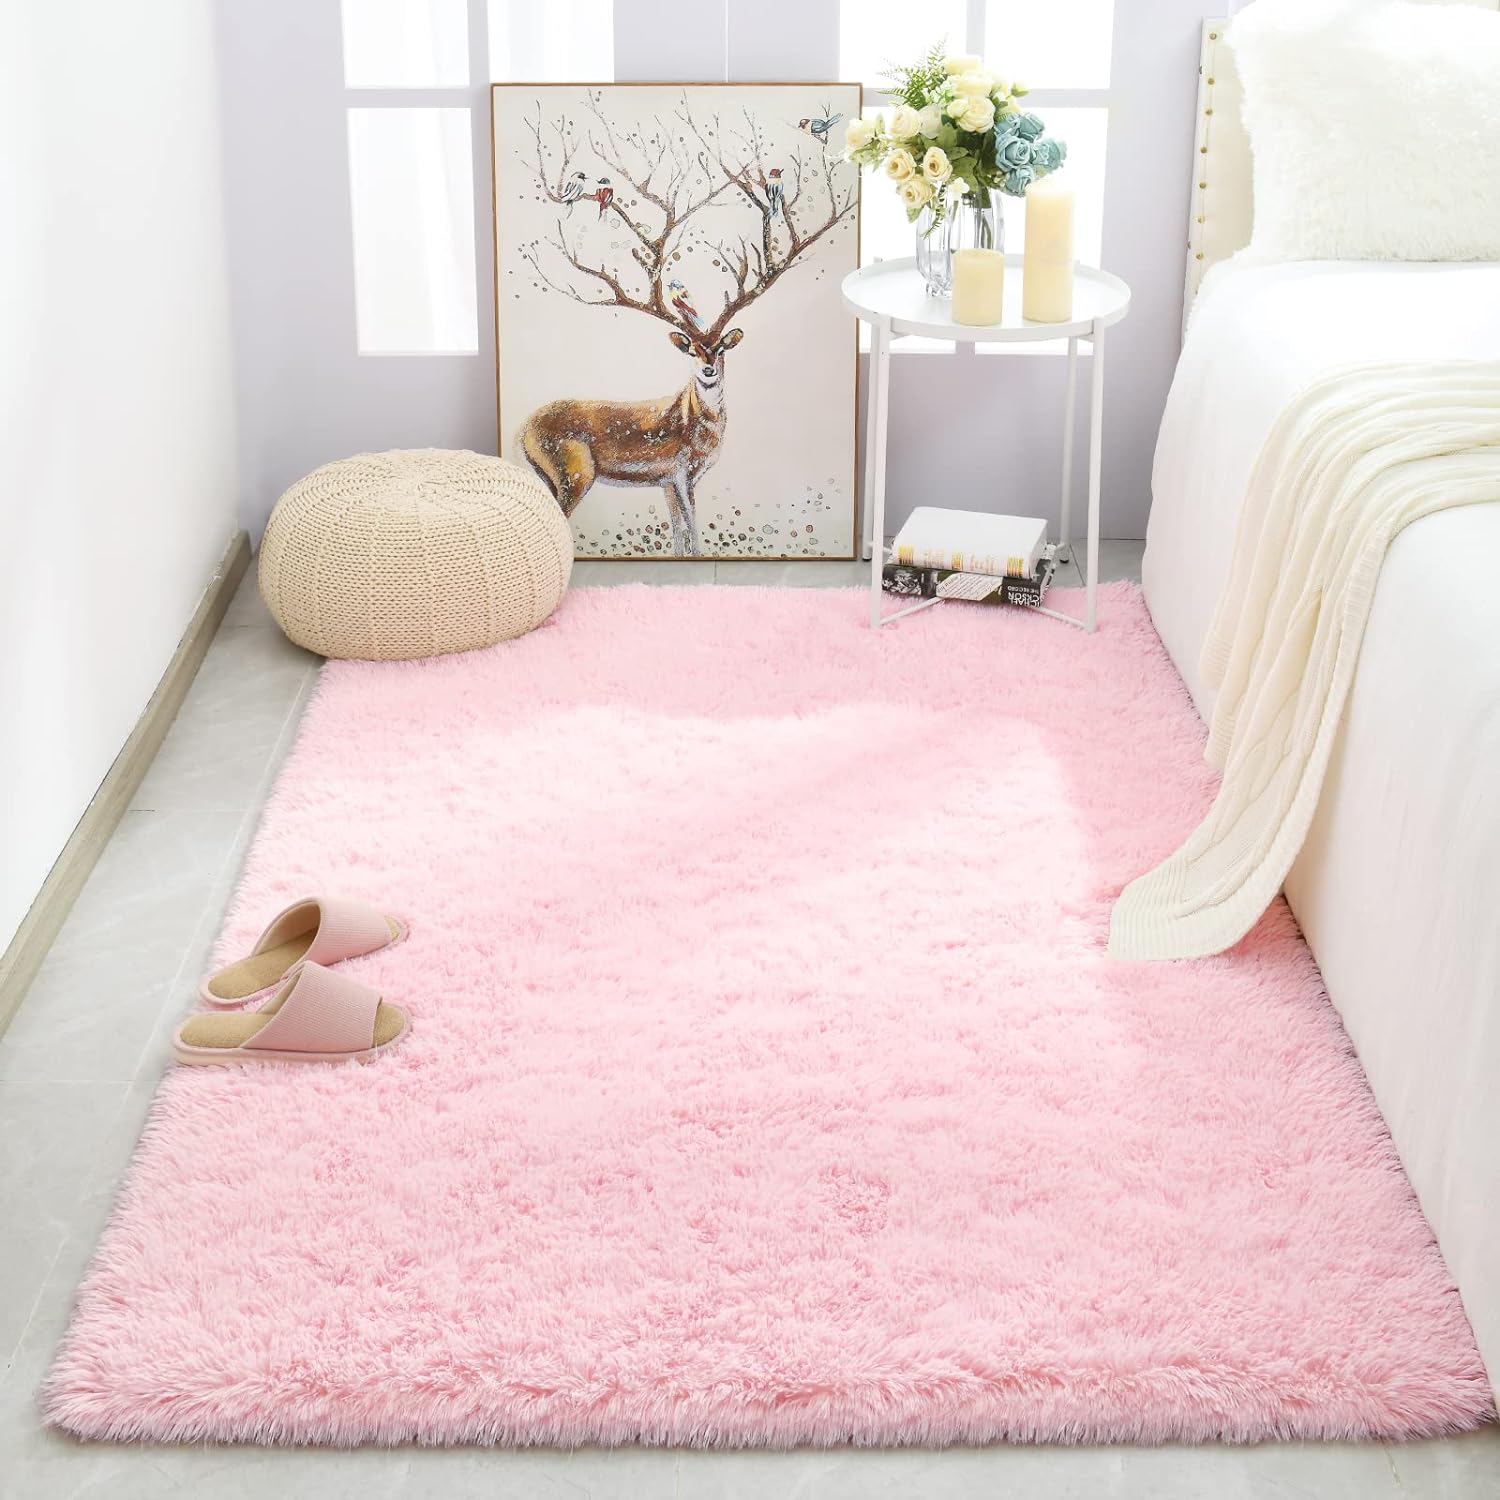 Merelax Soft Modern Indoor Shaggy Area Rug for Bedroom Livingroom Dorm Kids Room Home Decorative, Non-Slip Plush Fluffy Furry Fur Rugs Comfy Nursery Accent Floor Carpet 3x5 Feet, Pink